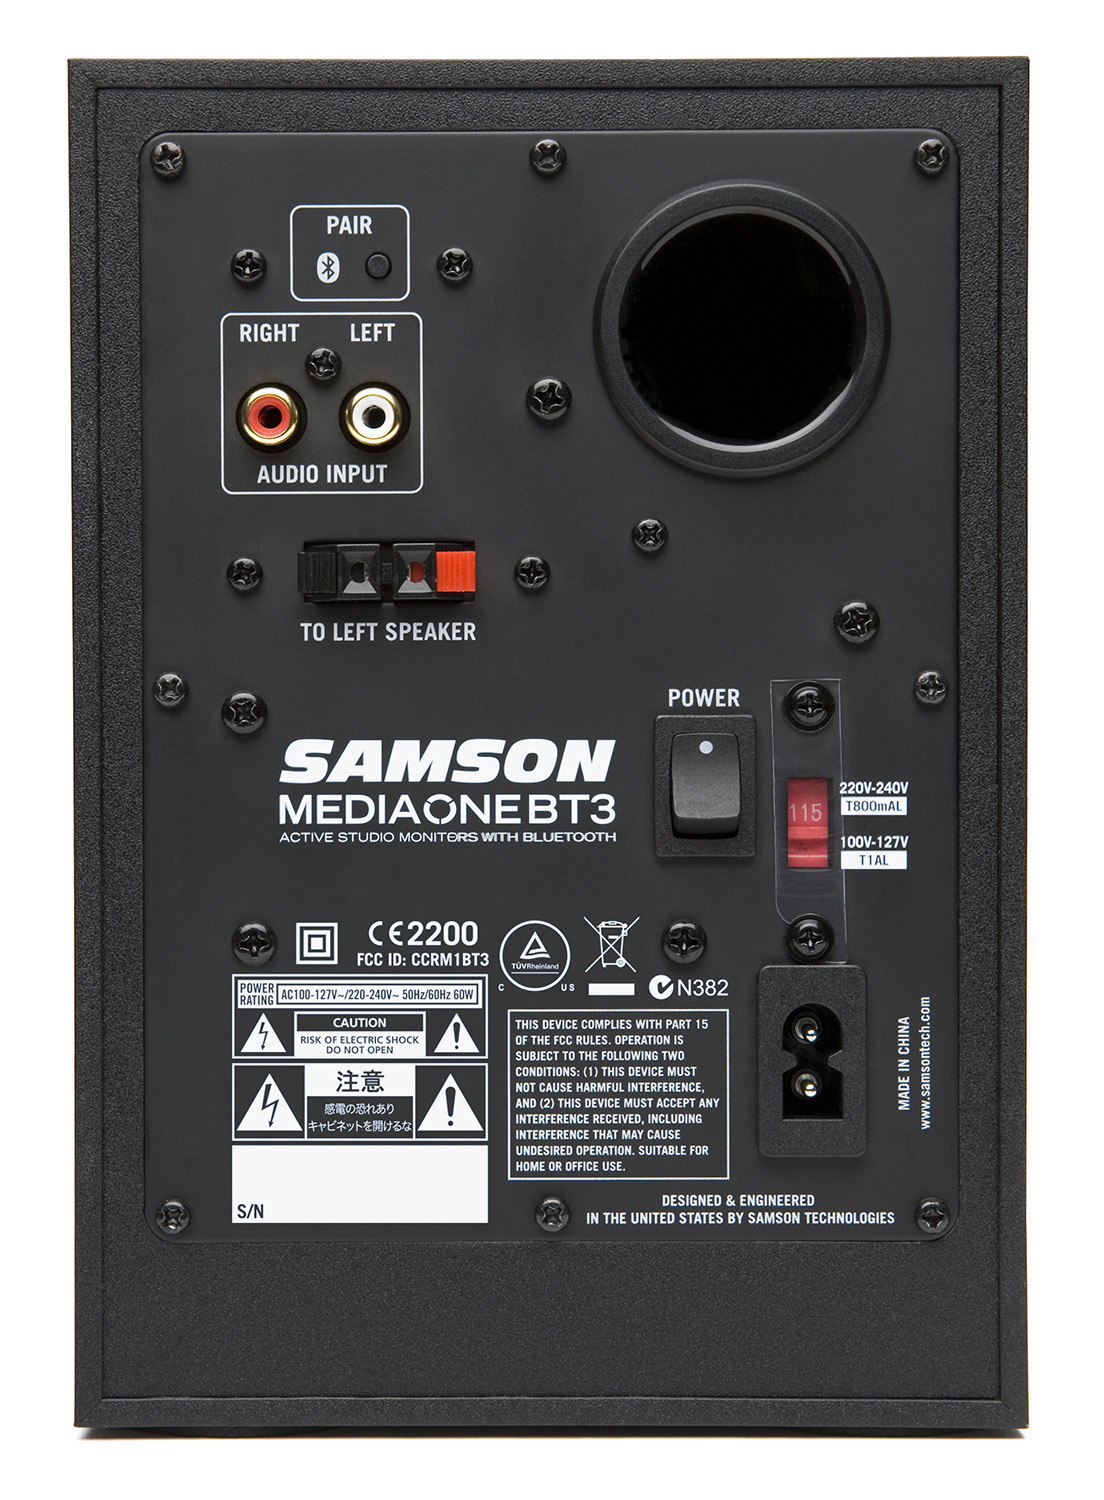 Samson MediaOne BT3 Active Studio Monitors with Bluetooth